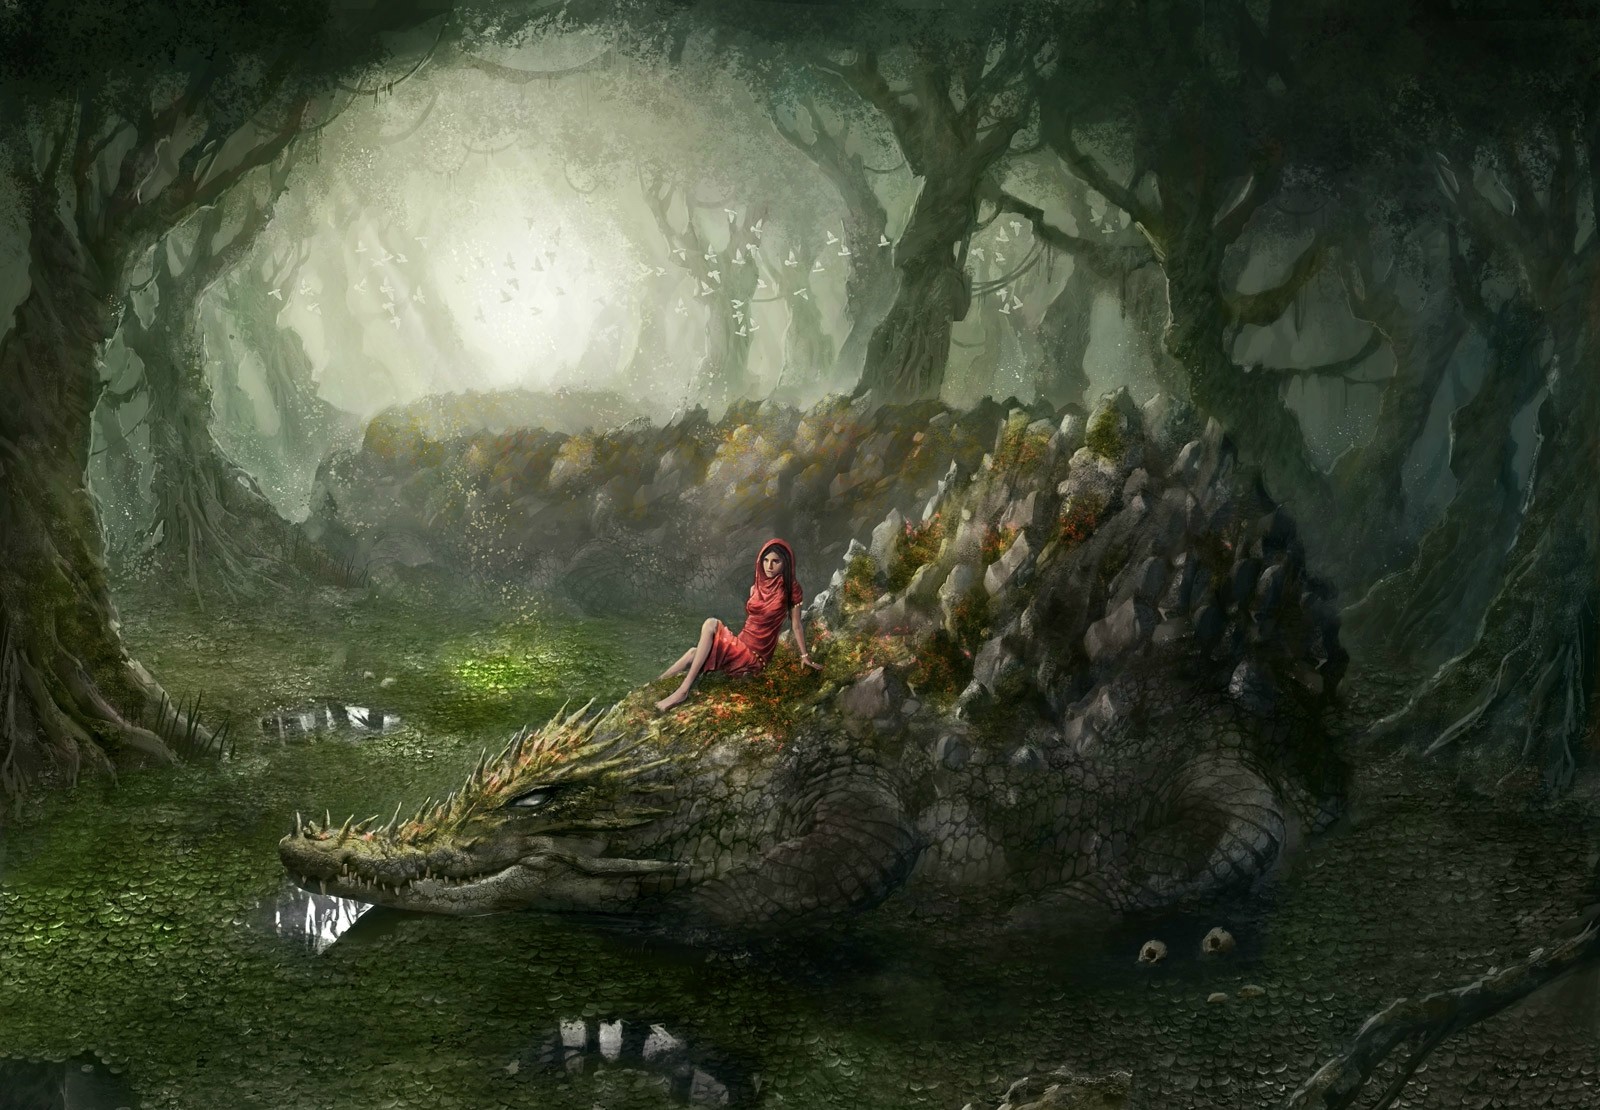 General 1600x1110 fantasy art artwork fantasy girl creature environment crocodiles digital art swamp women trees nature red clothing